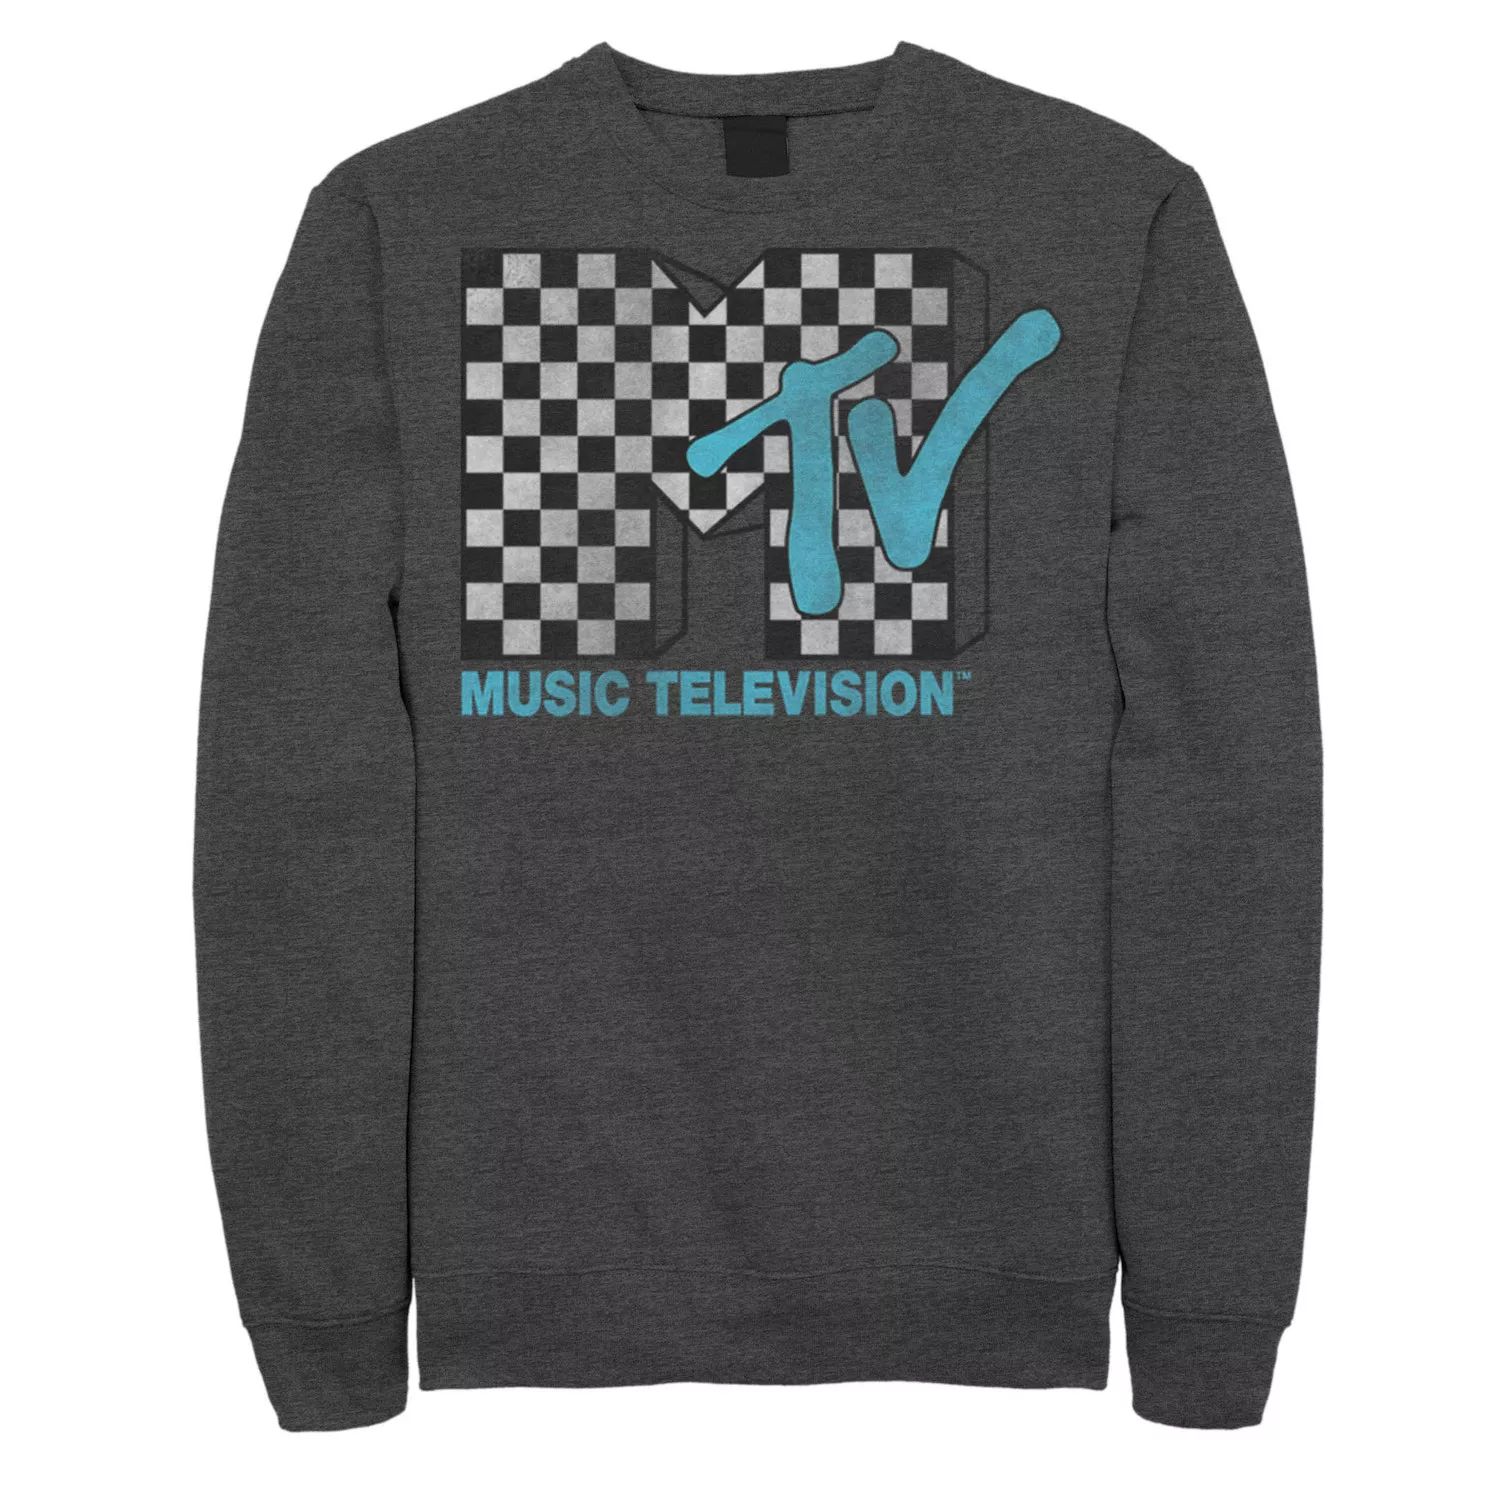 цена Мужской синий свитшот с логотипом MTV в черно-белую клетку в клетку TV Licensed Character